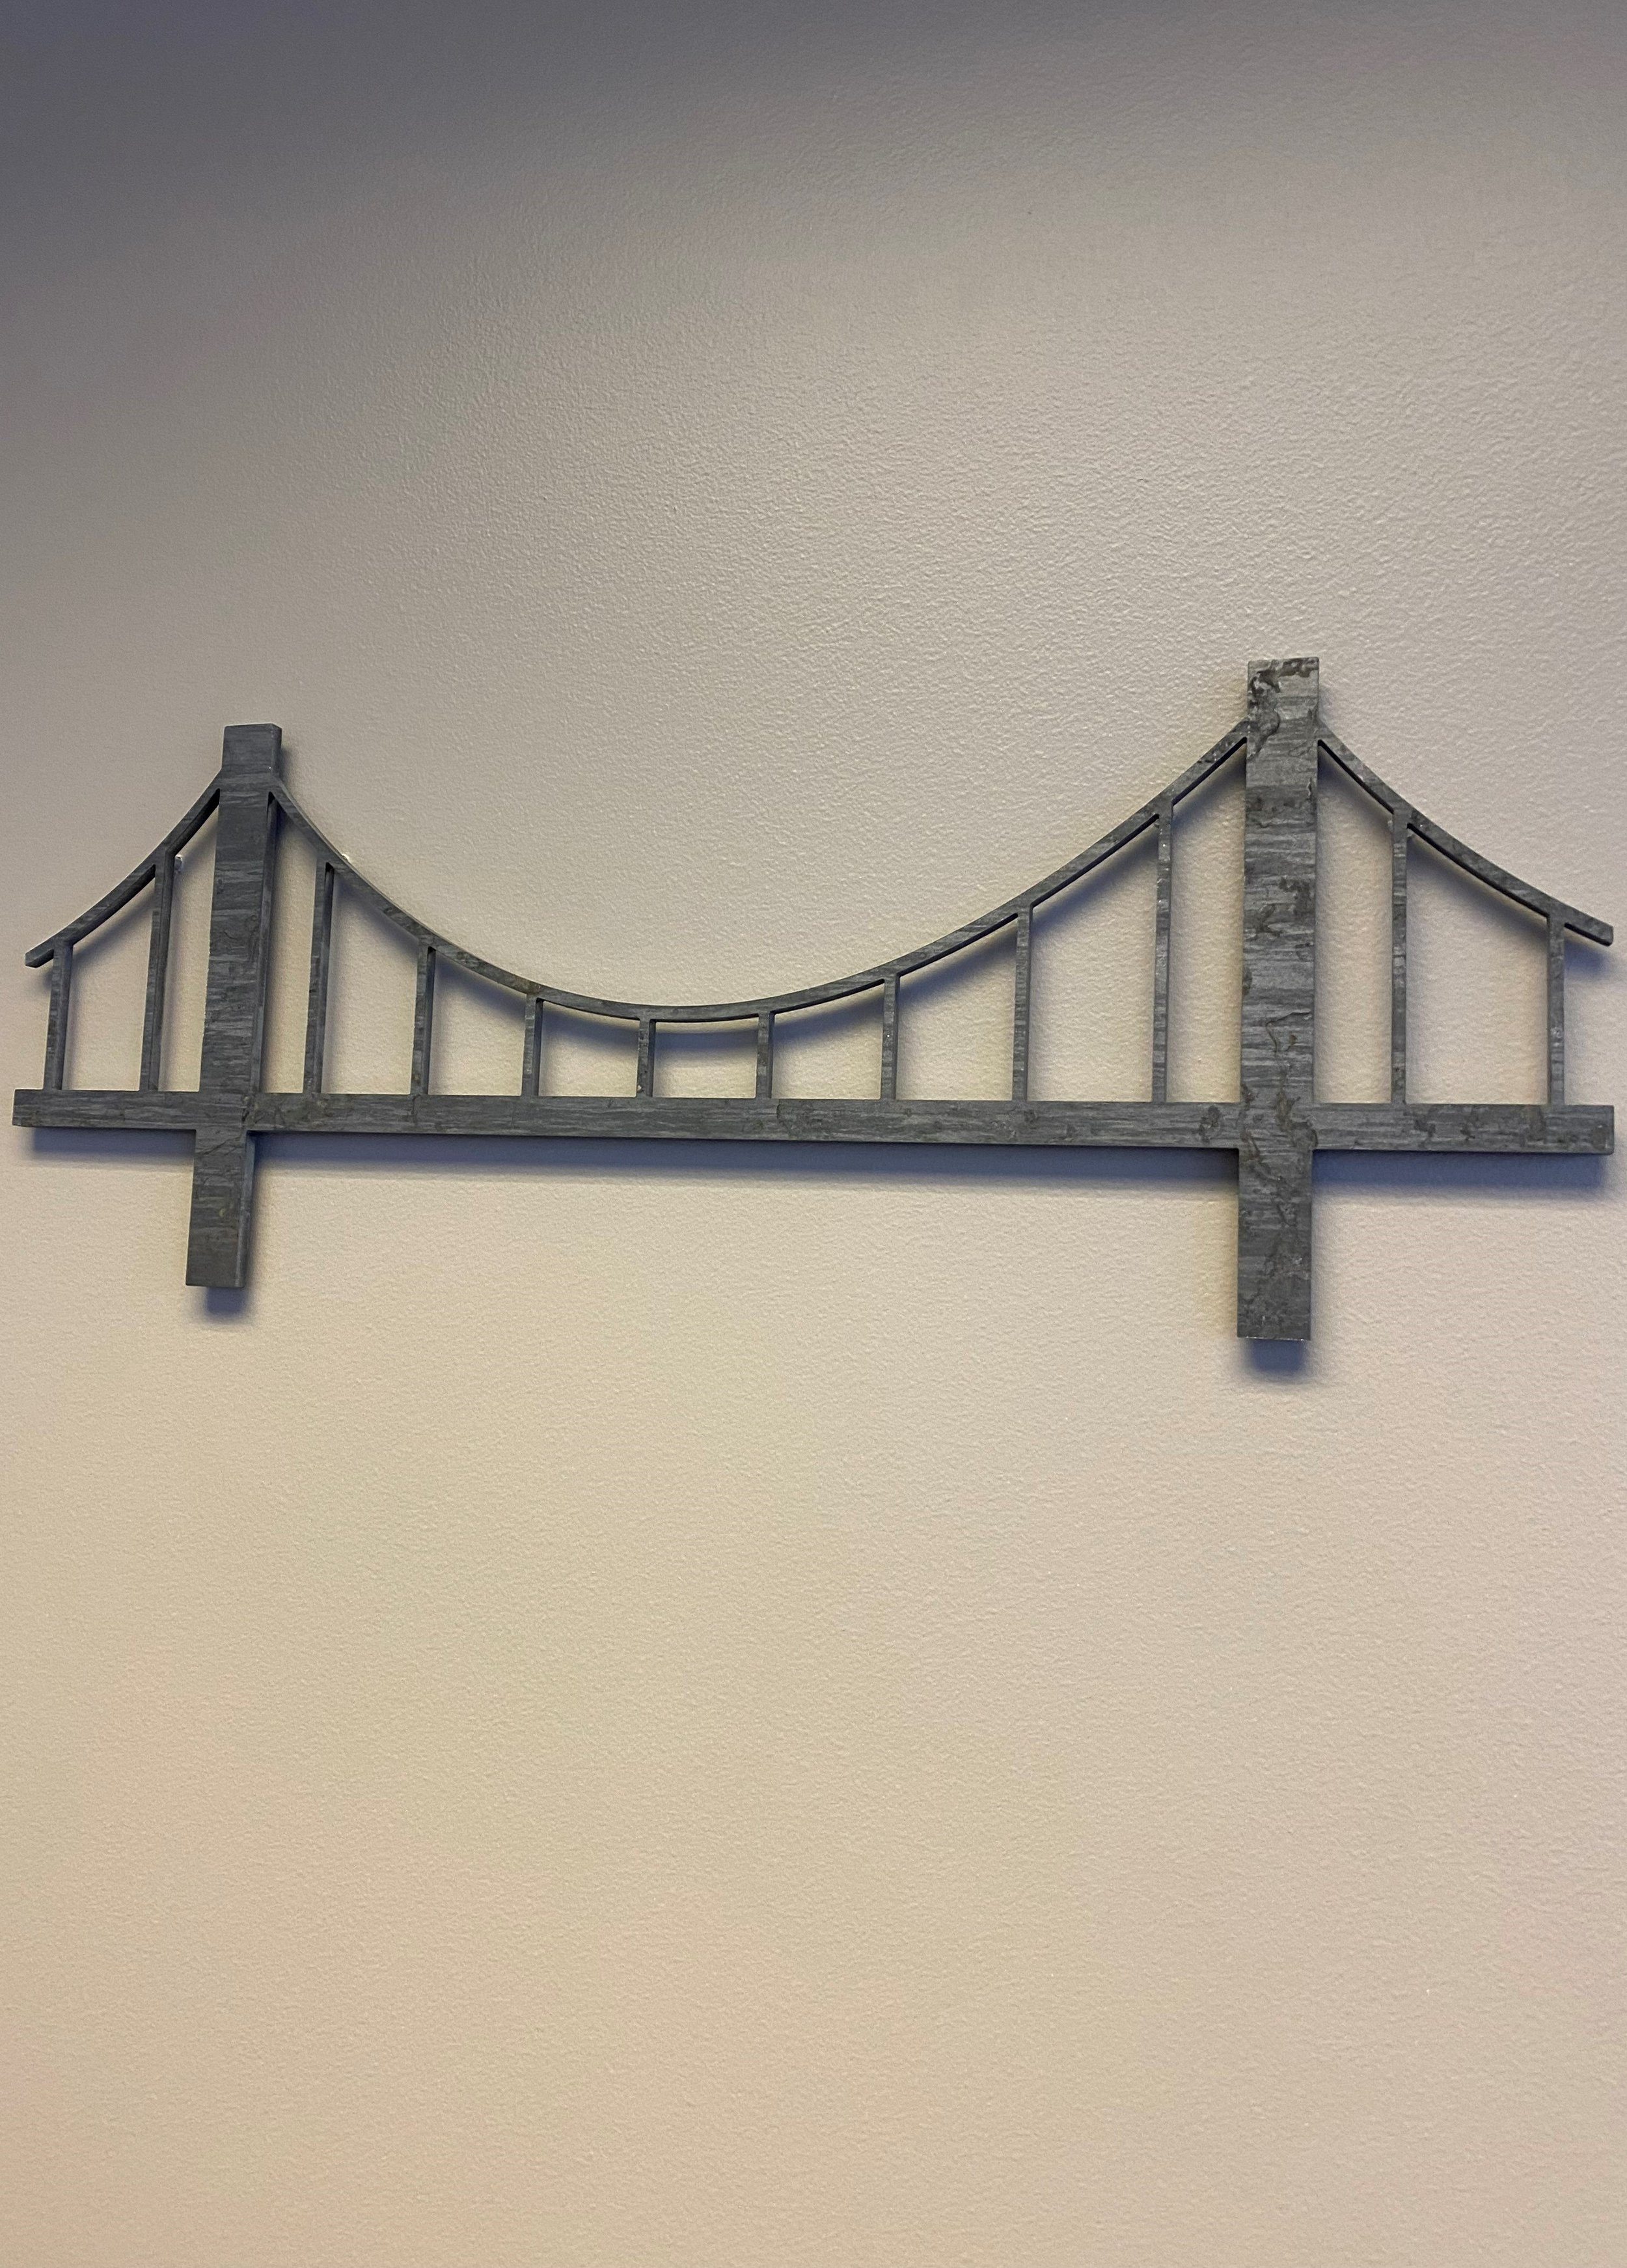 Metal bridge picture long.jpg